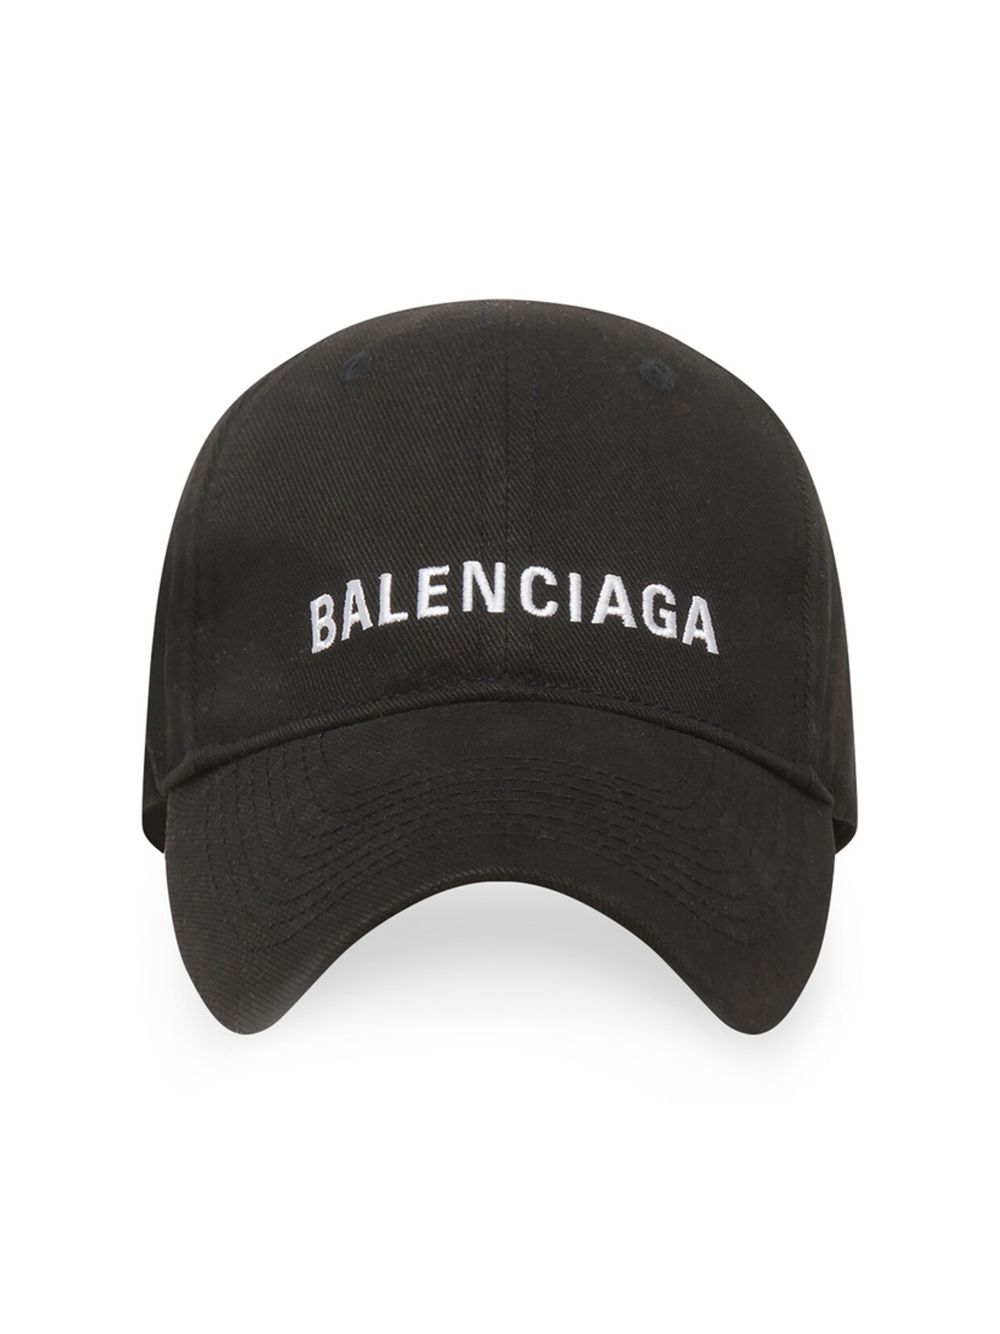 Кепка Баленсиага Balenciaga, черный